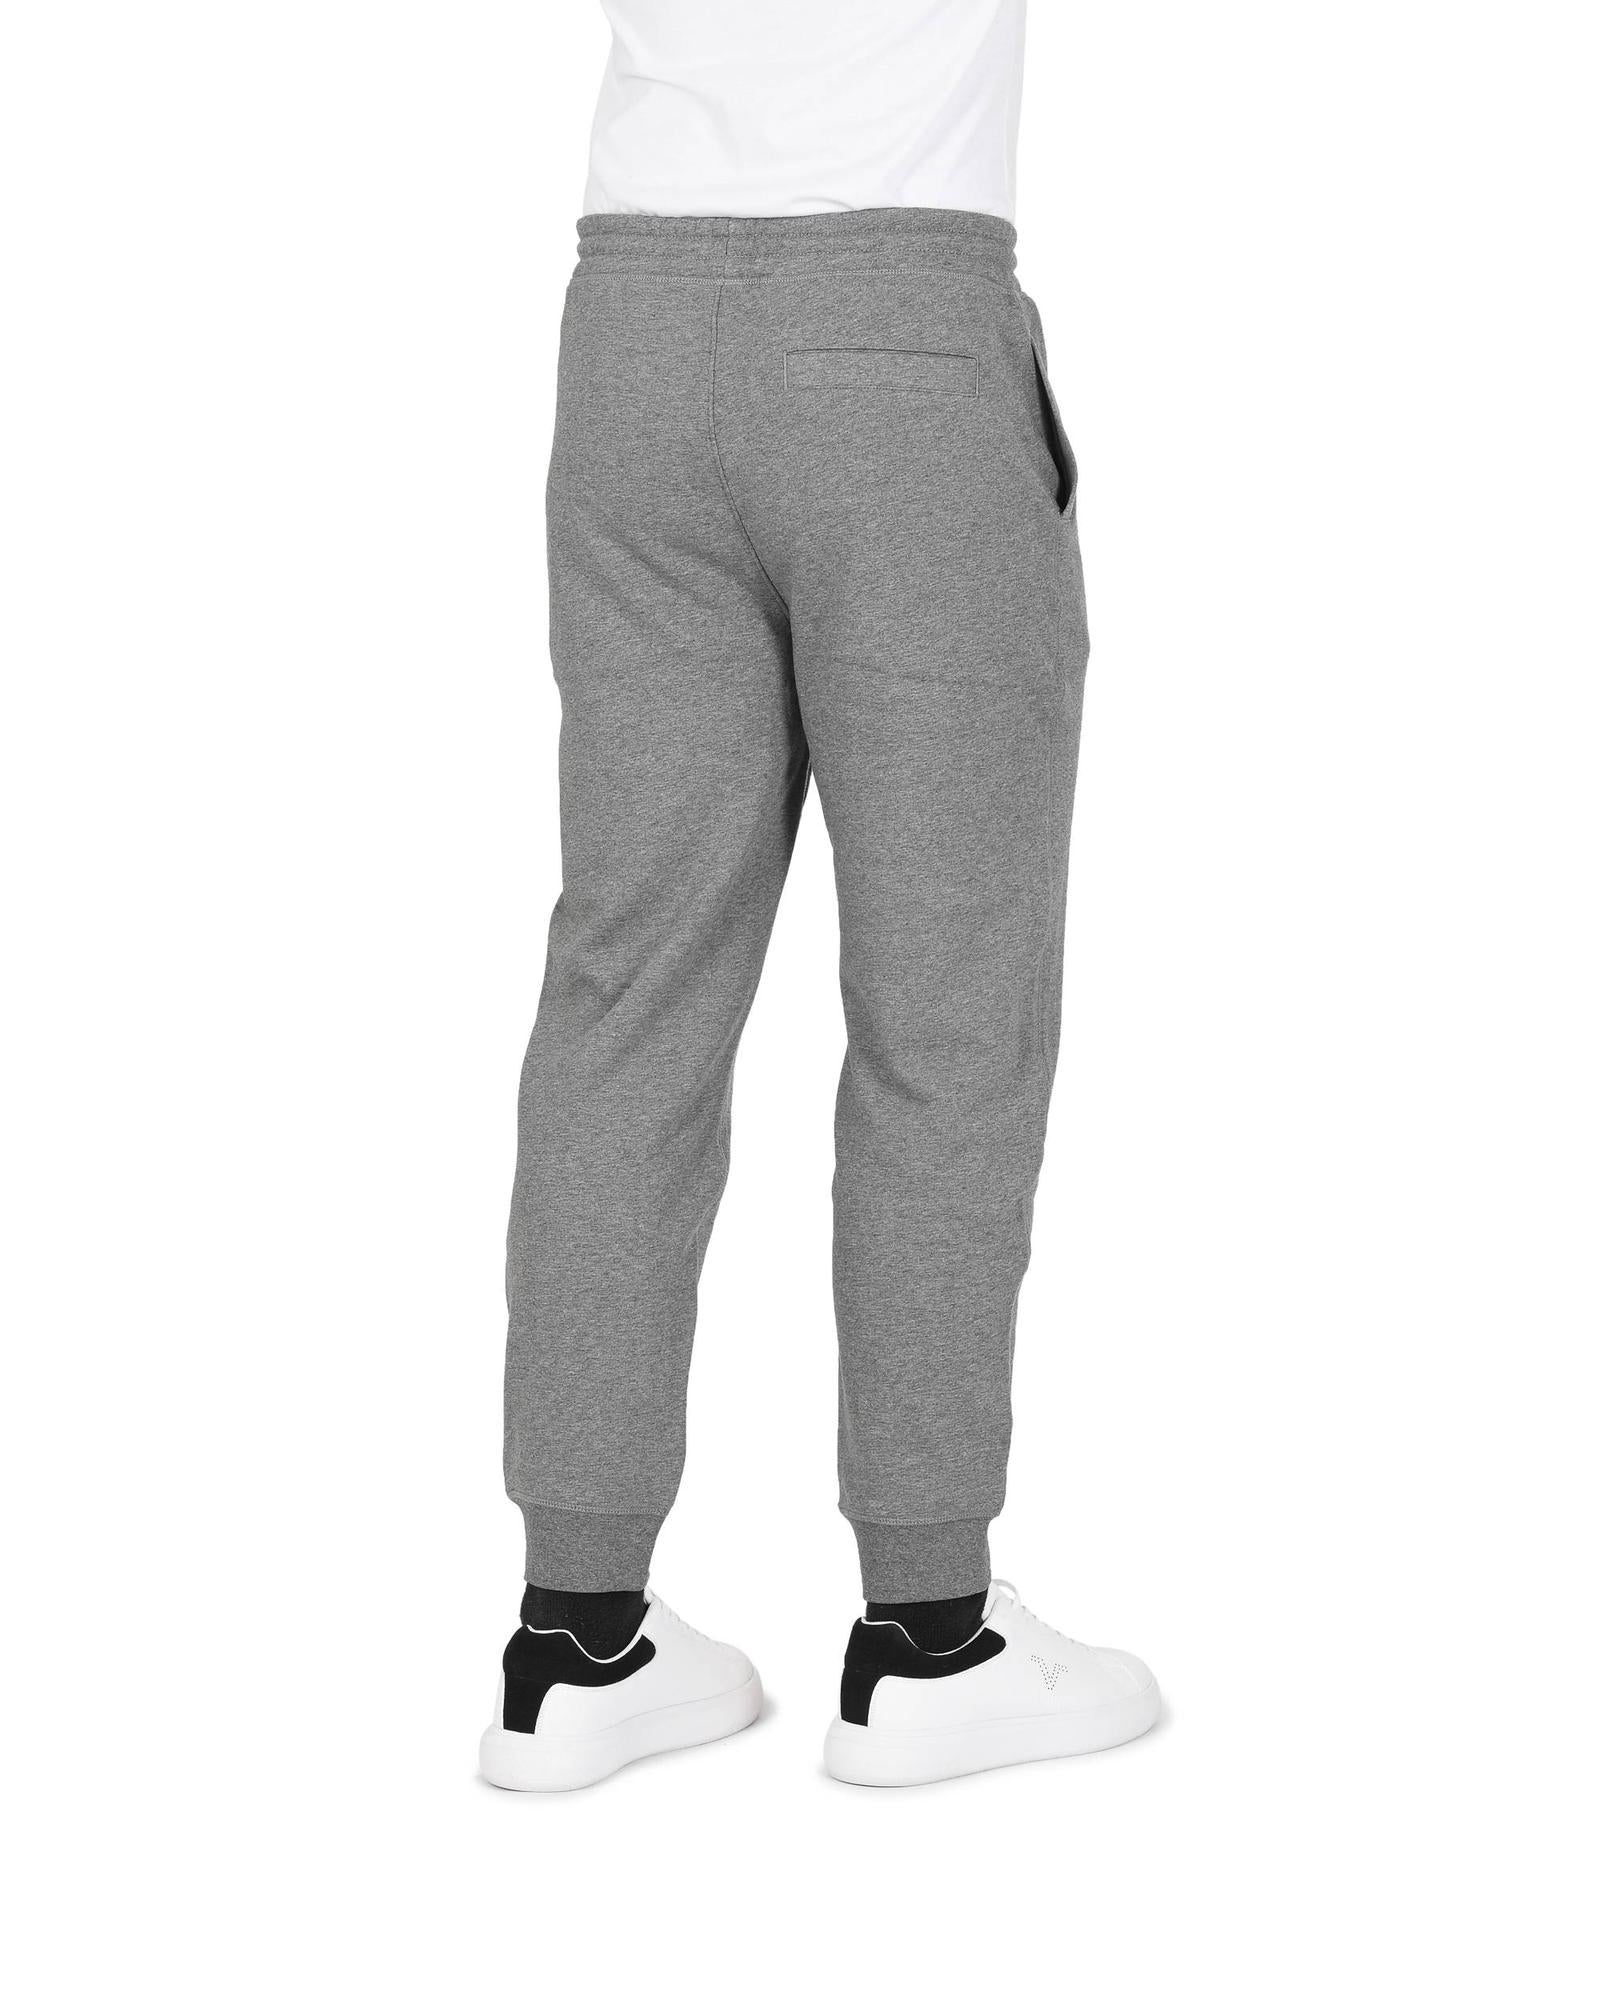 Sleek Grey Comfort Hugo Boss'S Cotton Blend Pants